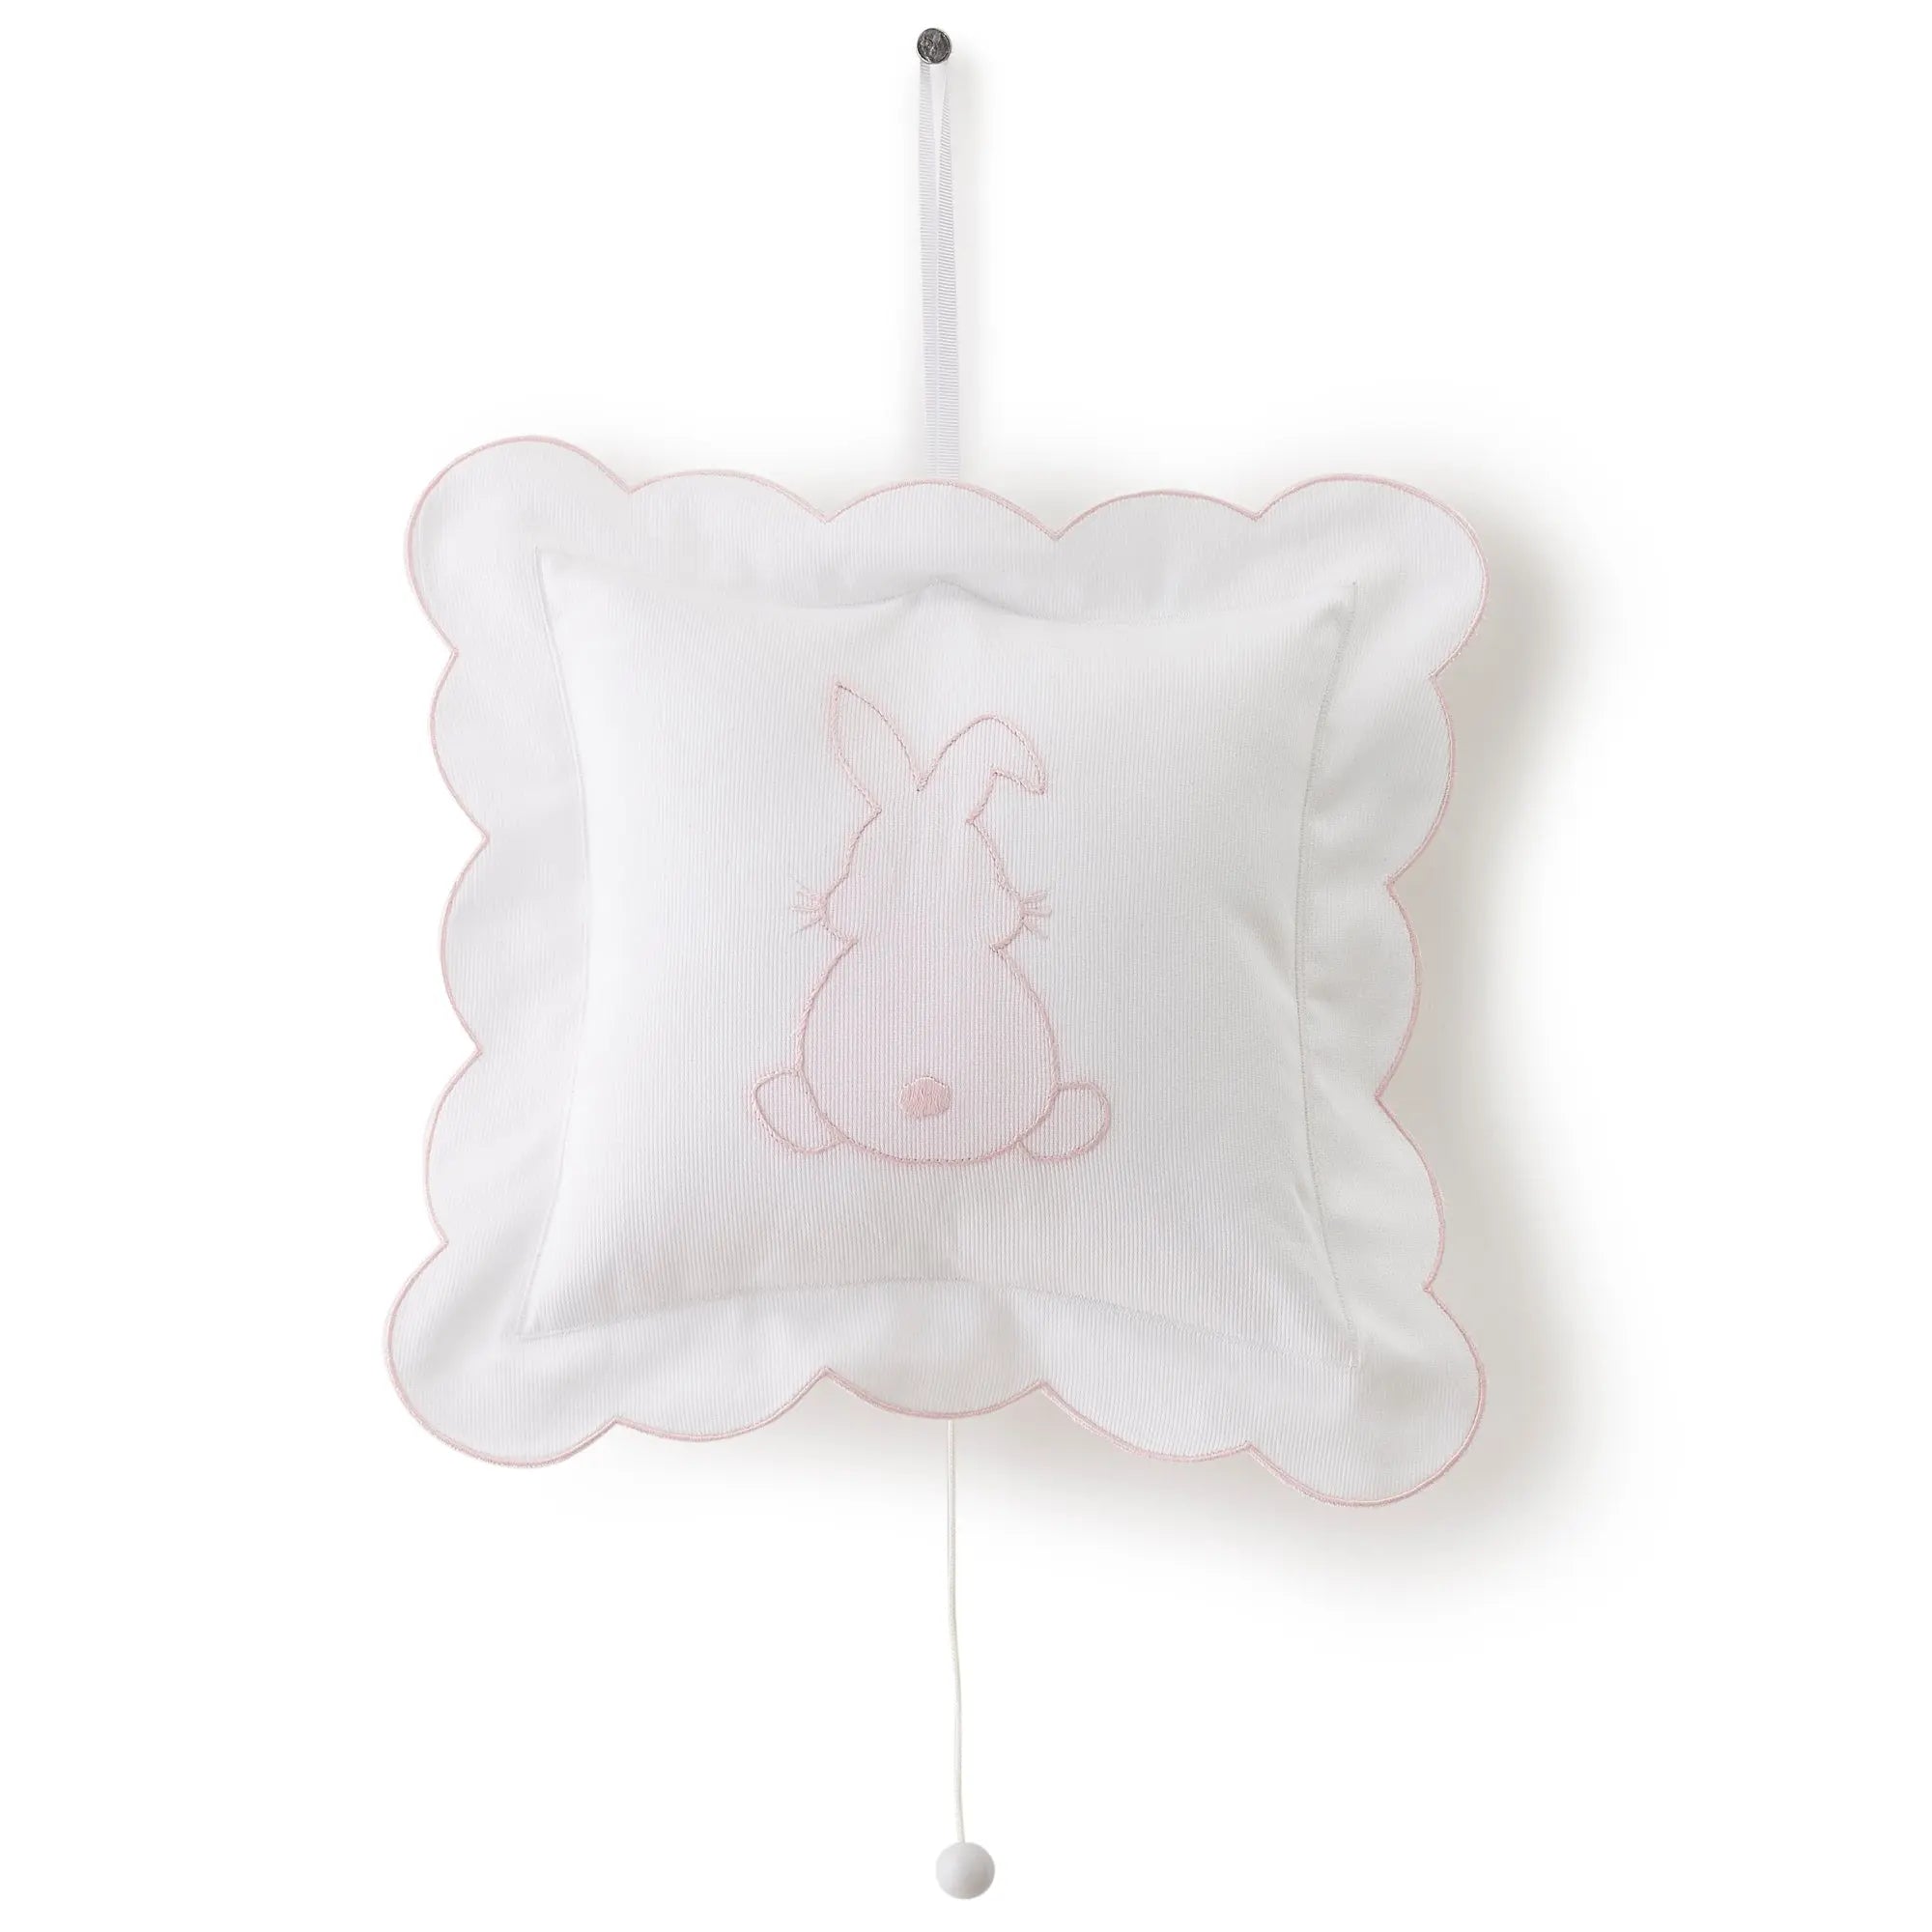 Musical pillow bunnies pink-Baby books, toys & musicals-Ferrari Mariella-Blue Almonds-London-South Kensington